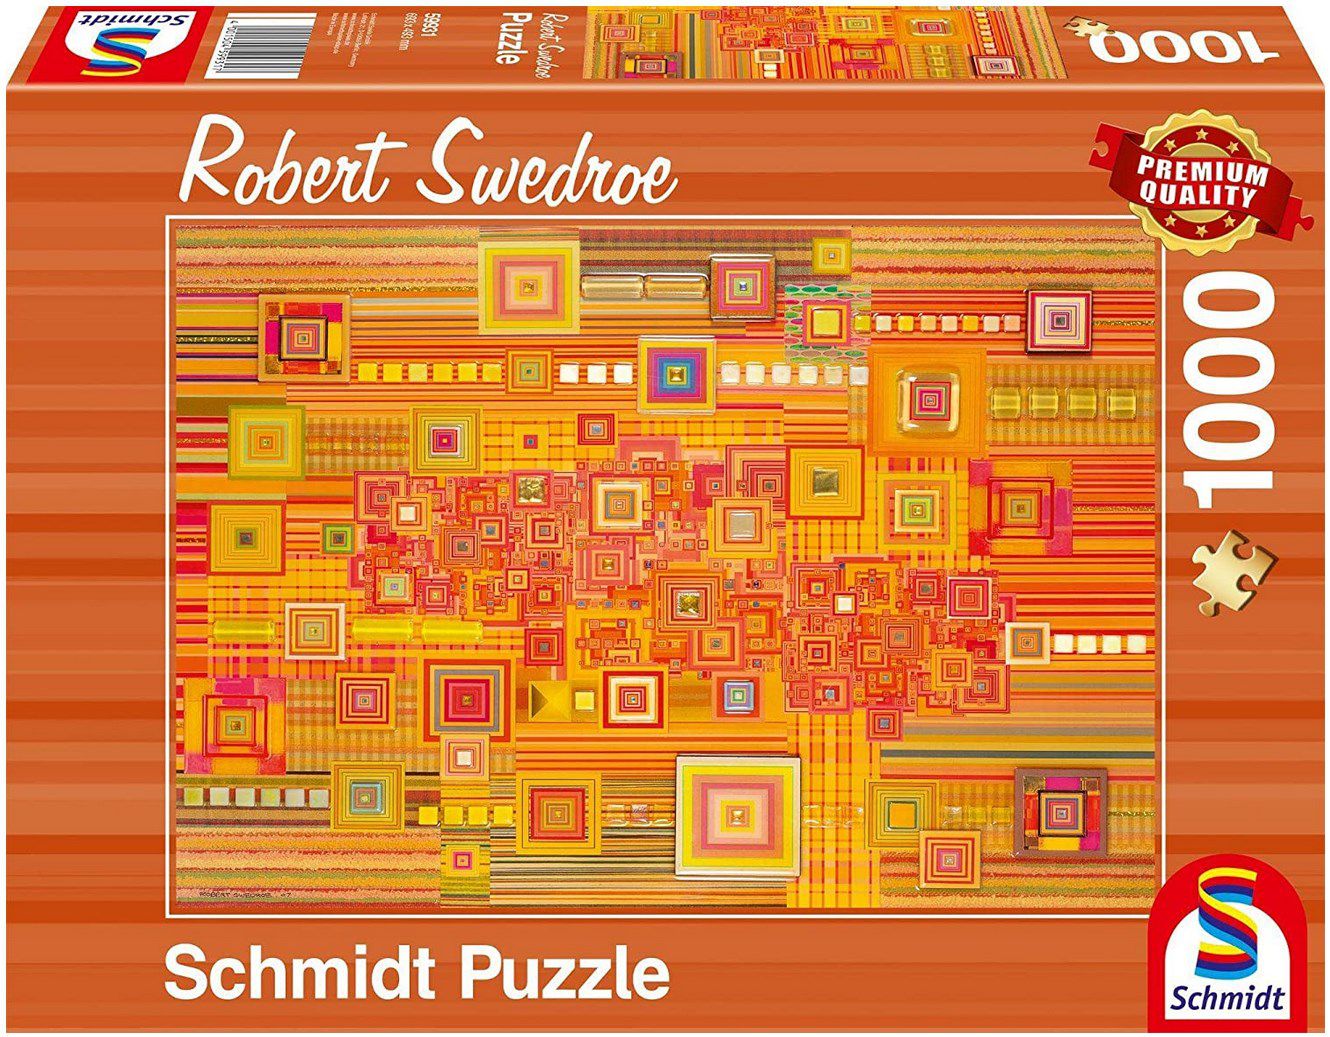 Schmidt 59931: Robert Swedroe, Cyber Kapriolen, 1000 Teile Puzzle für 7,68€ (statt 12€)   Prime